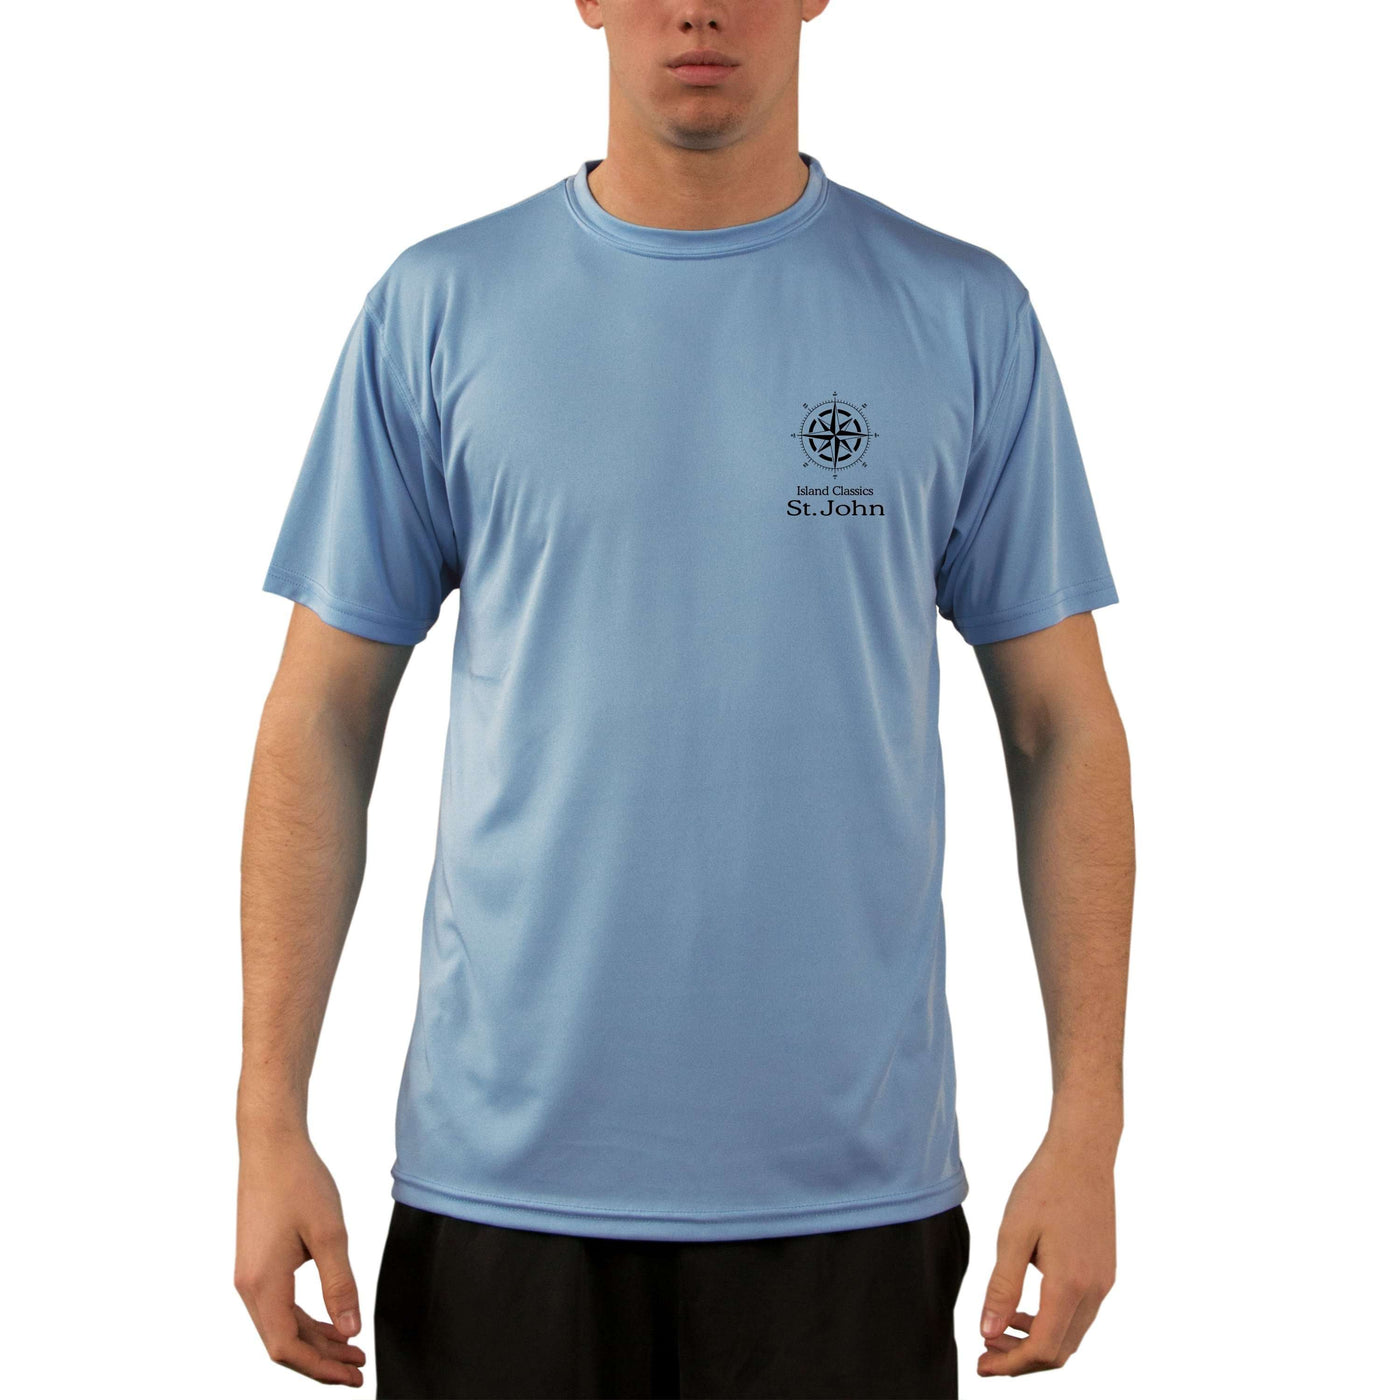 Island Classics St. John Men's UPF 50+ UV Sun Protection Short Sleeve T-shirt